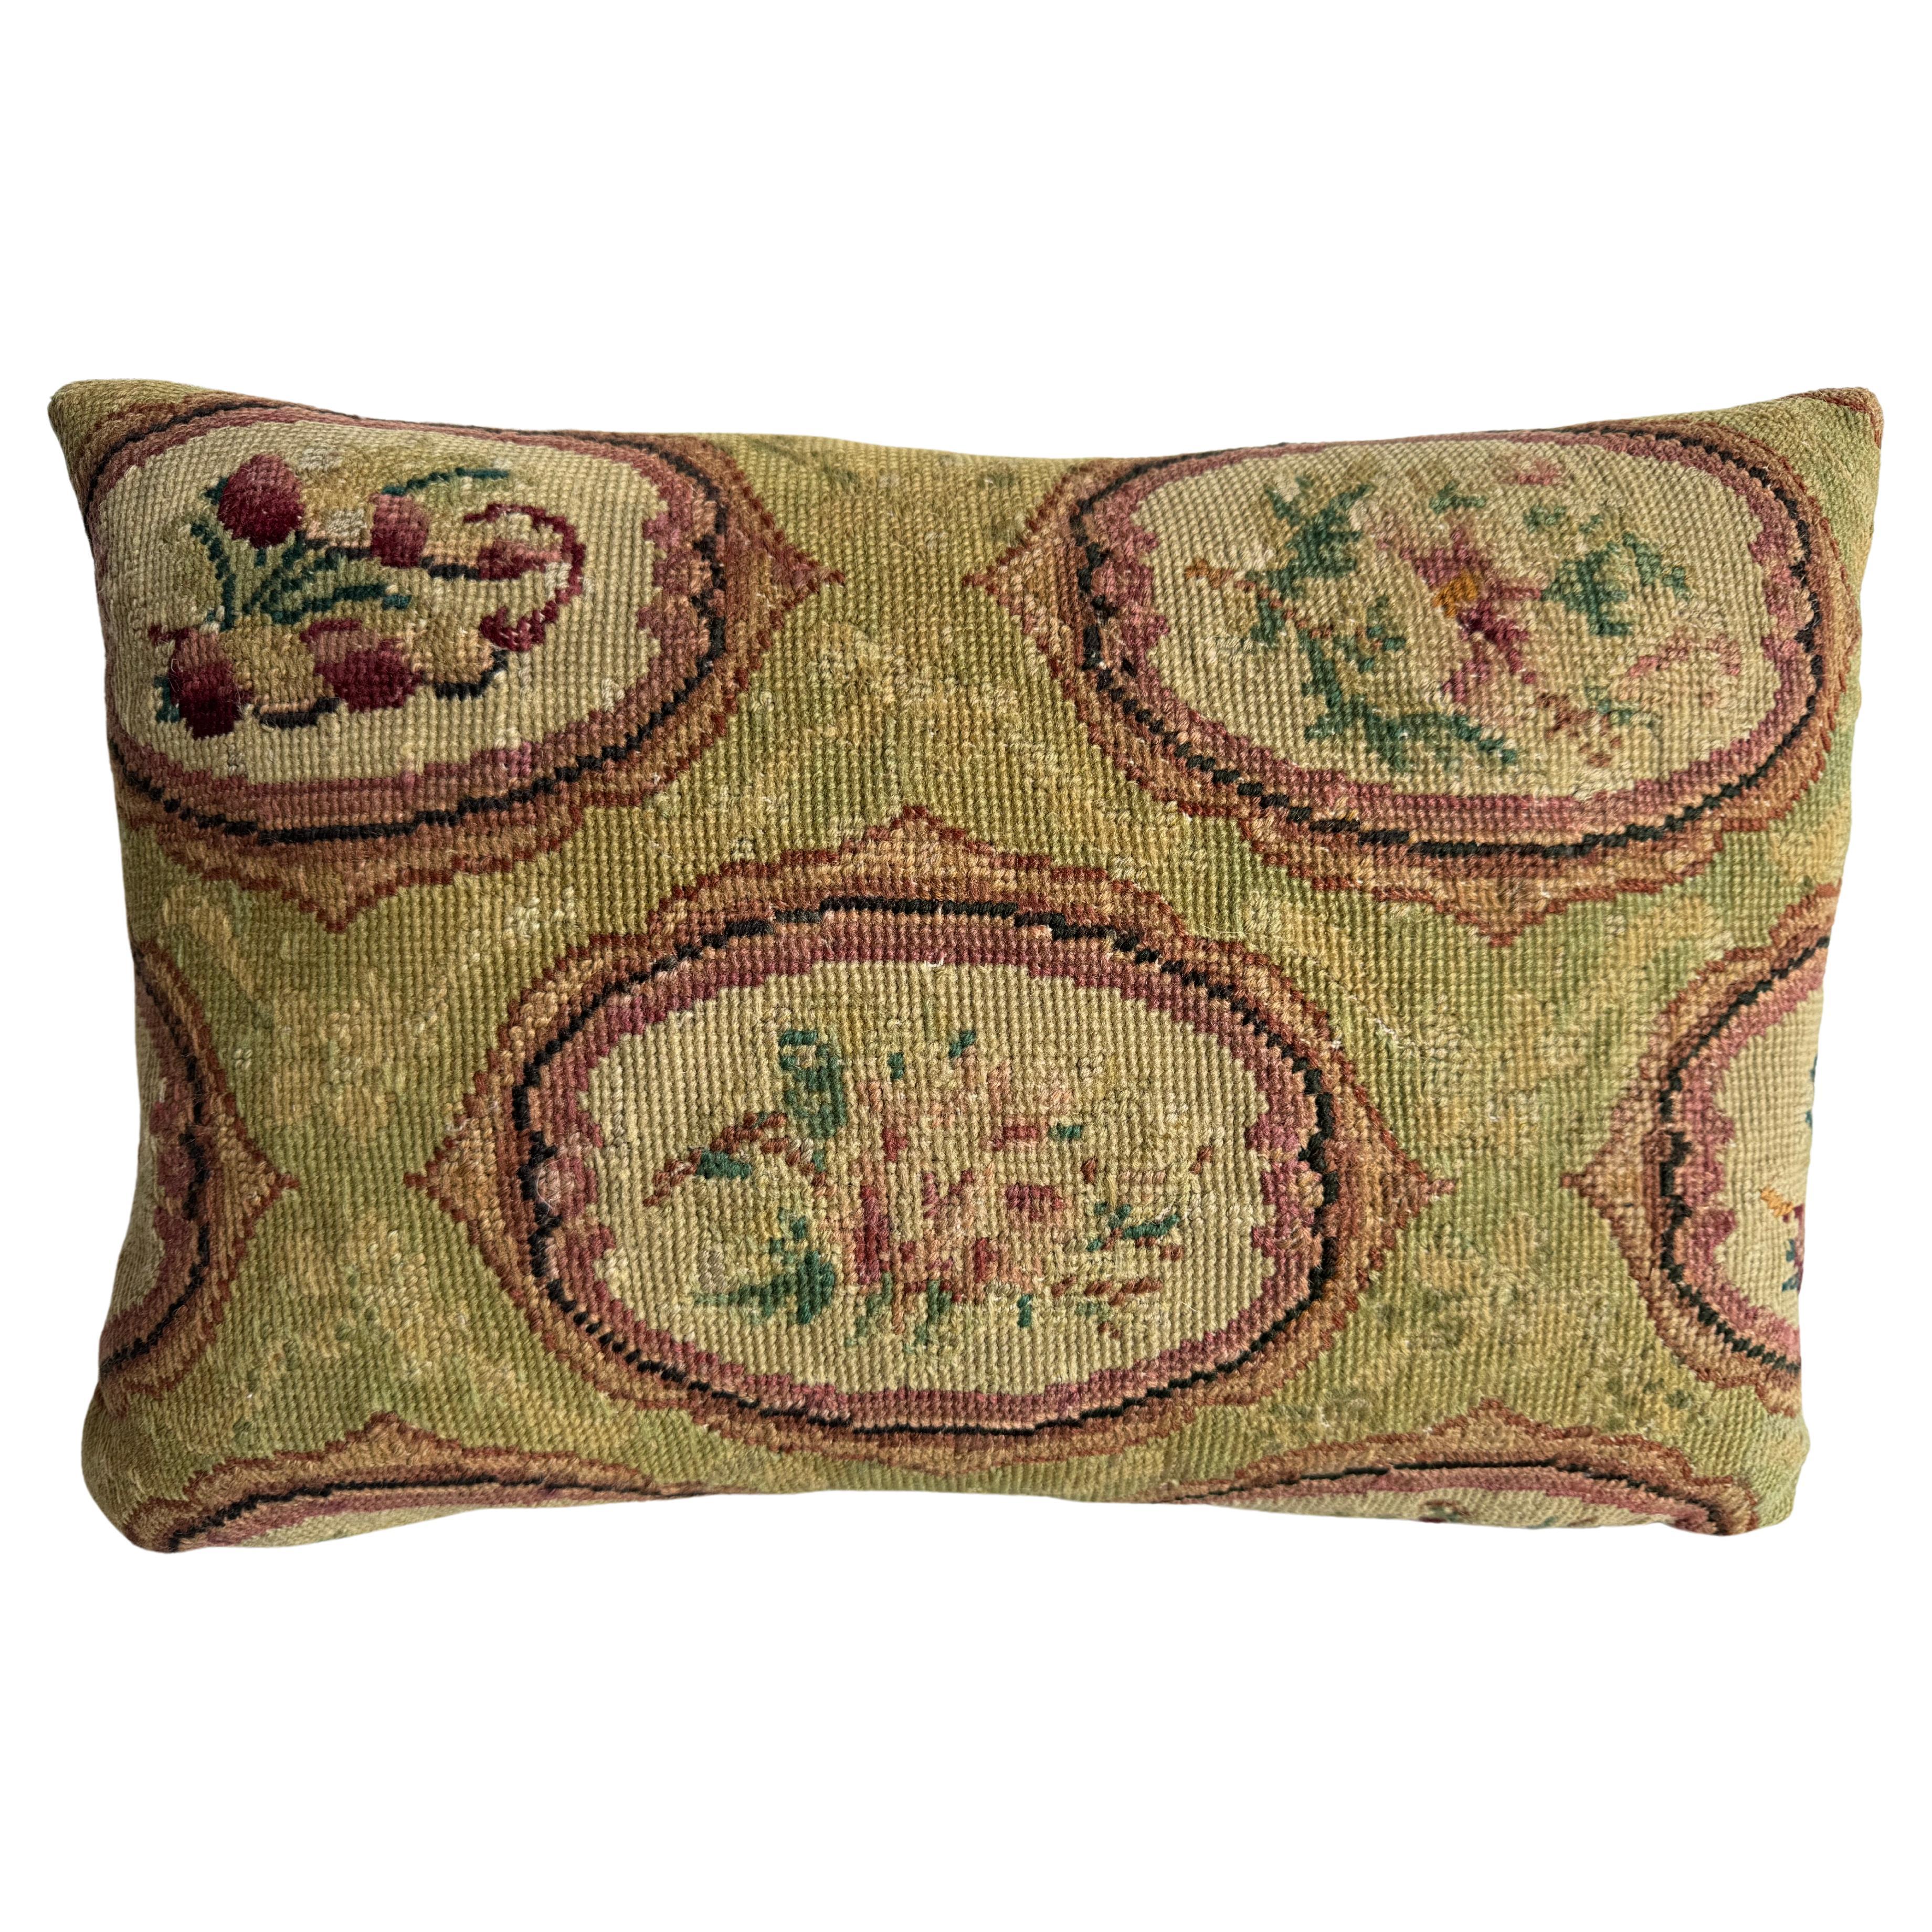 1852 English Needlework 17" x 12" Pillow For Sale